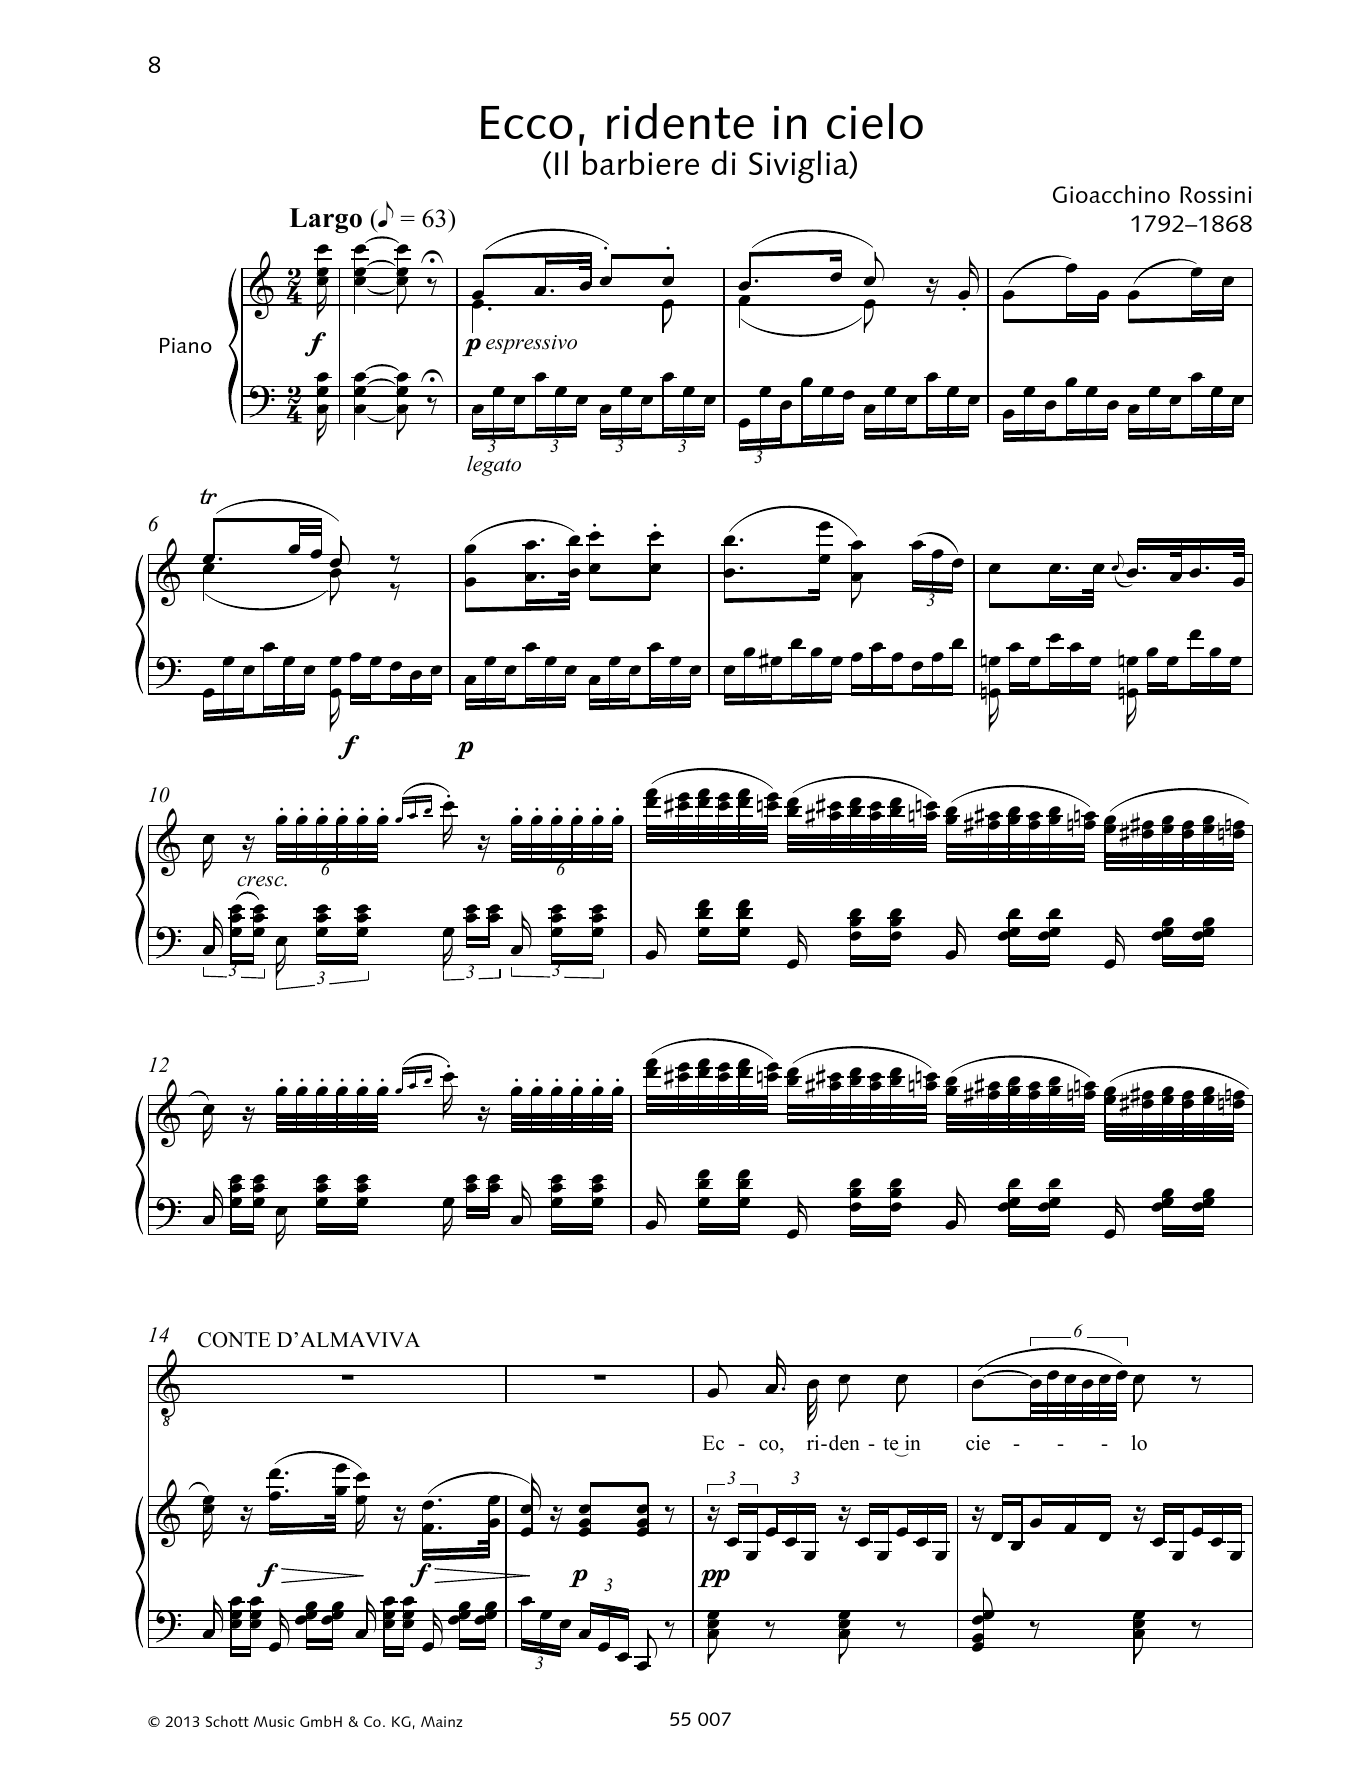 Francesca Licciarda Ecco ridente in cielo Sheet Music Notes & Chords for Piano & Vocal - Download or Print PDF